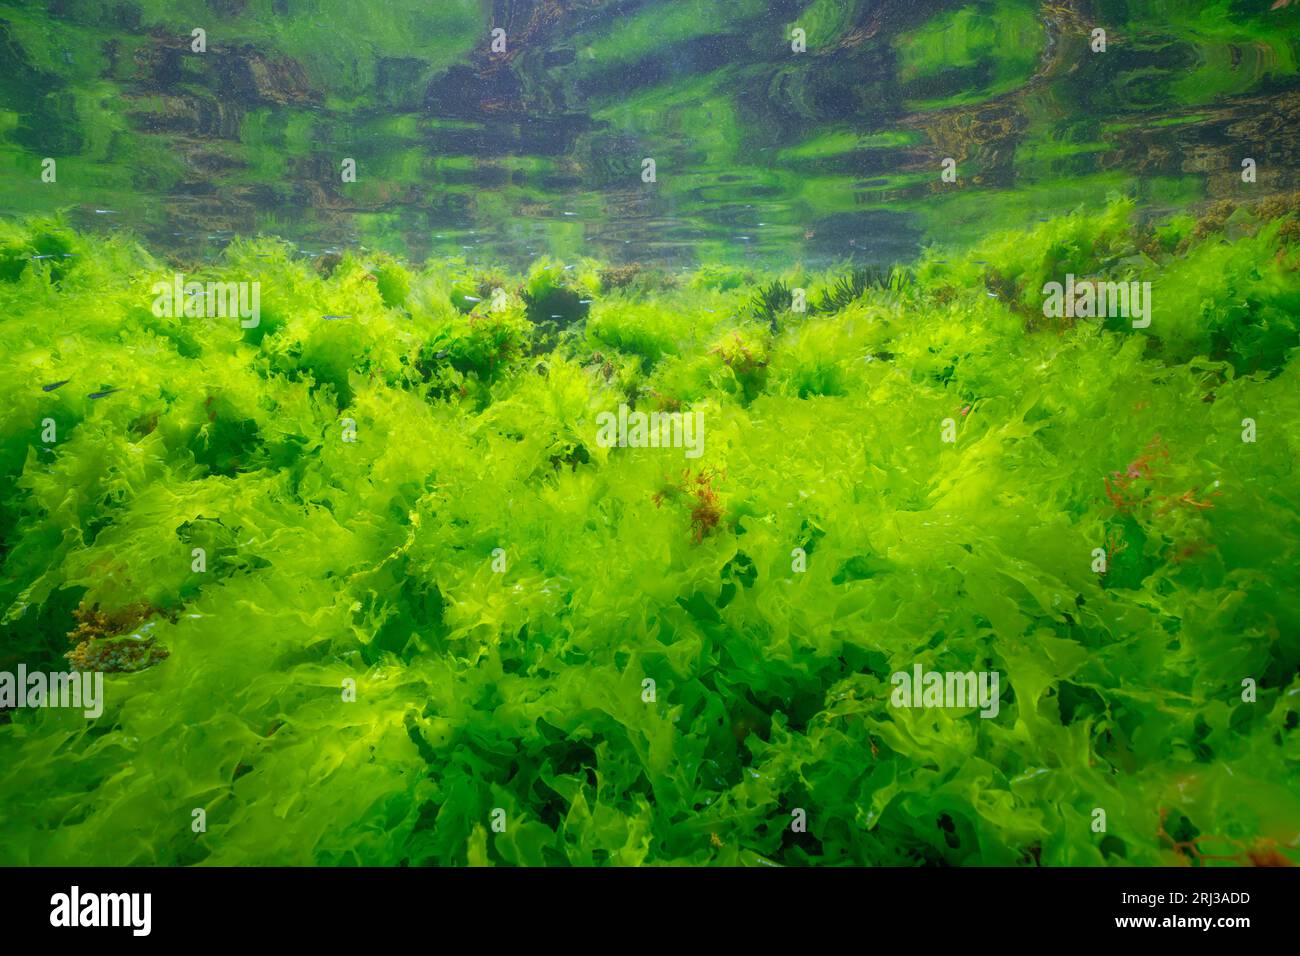 Sea lettuce green algae underwater (Ulva lactuca seaweed) below water surface in the Atlantic ocean, natural scene, Spain, Galicia Stock Photo